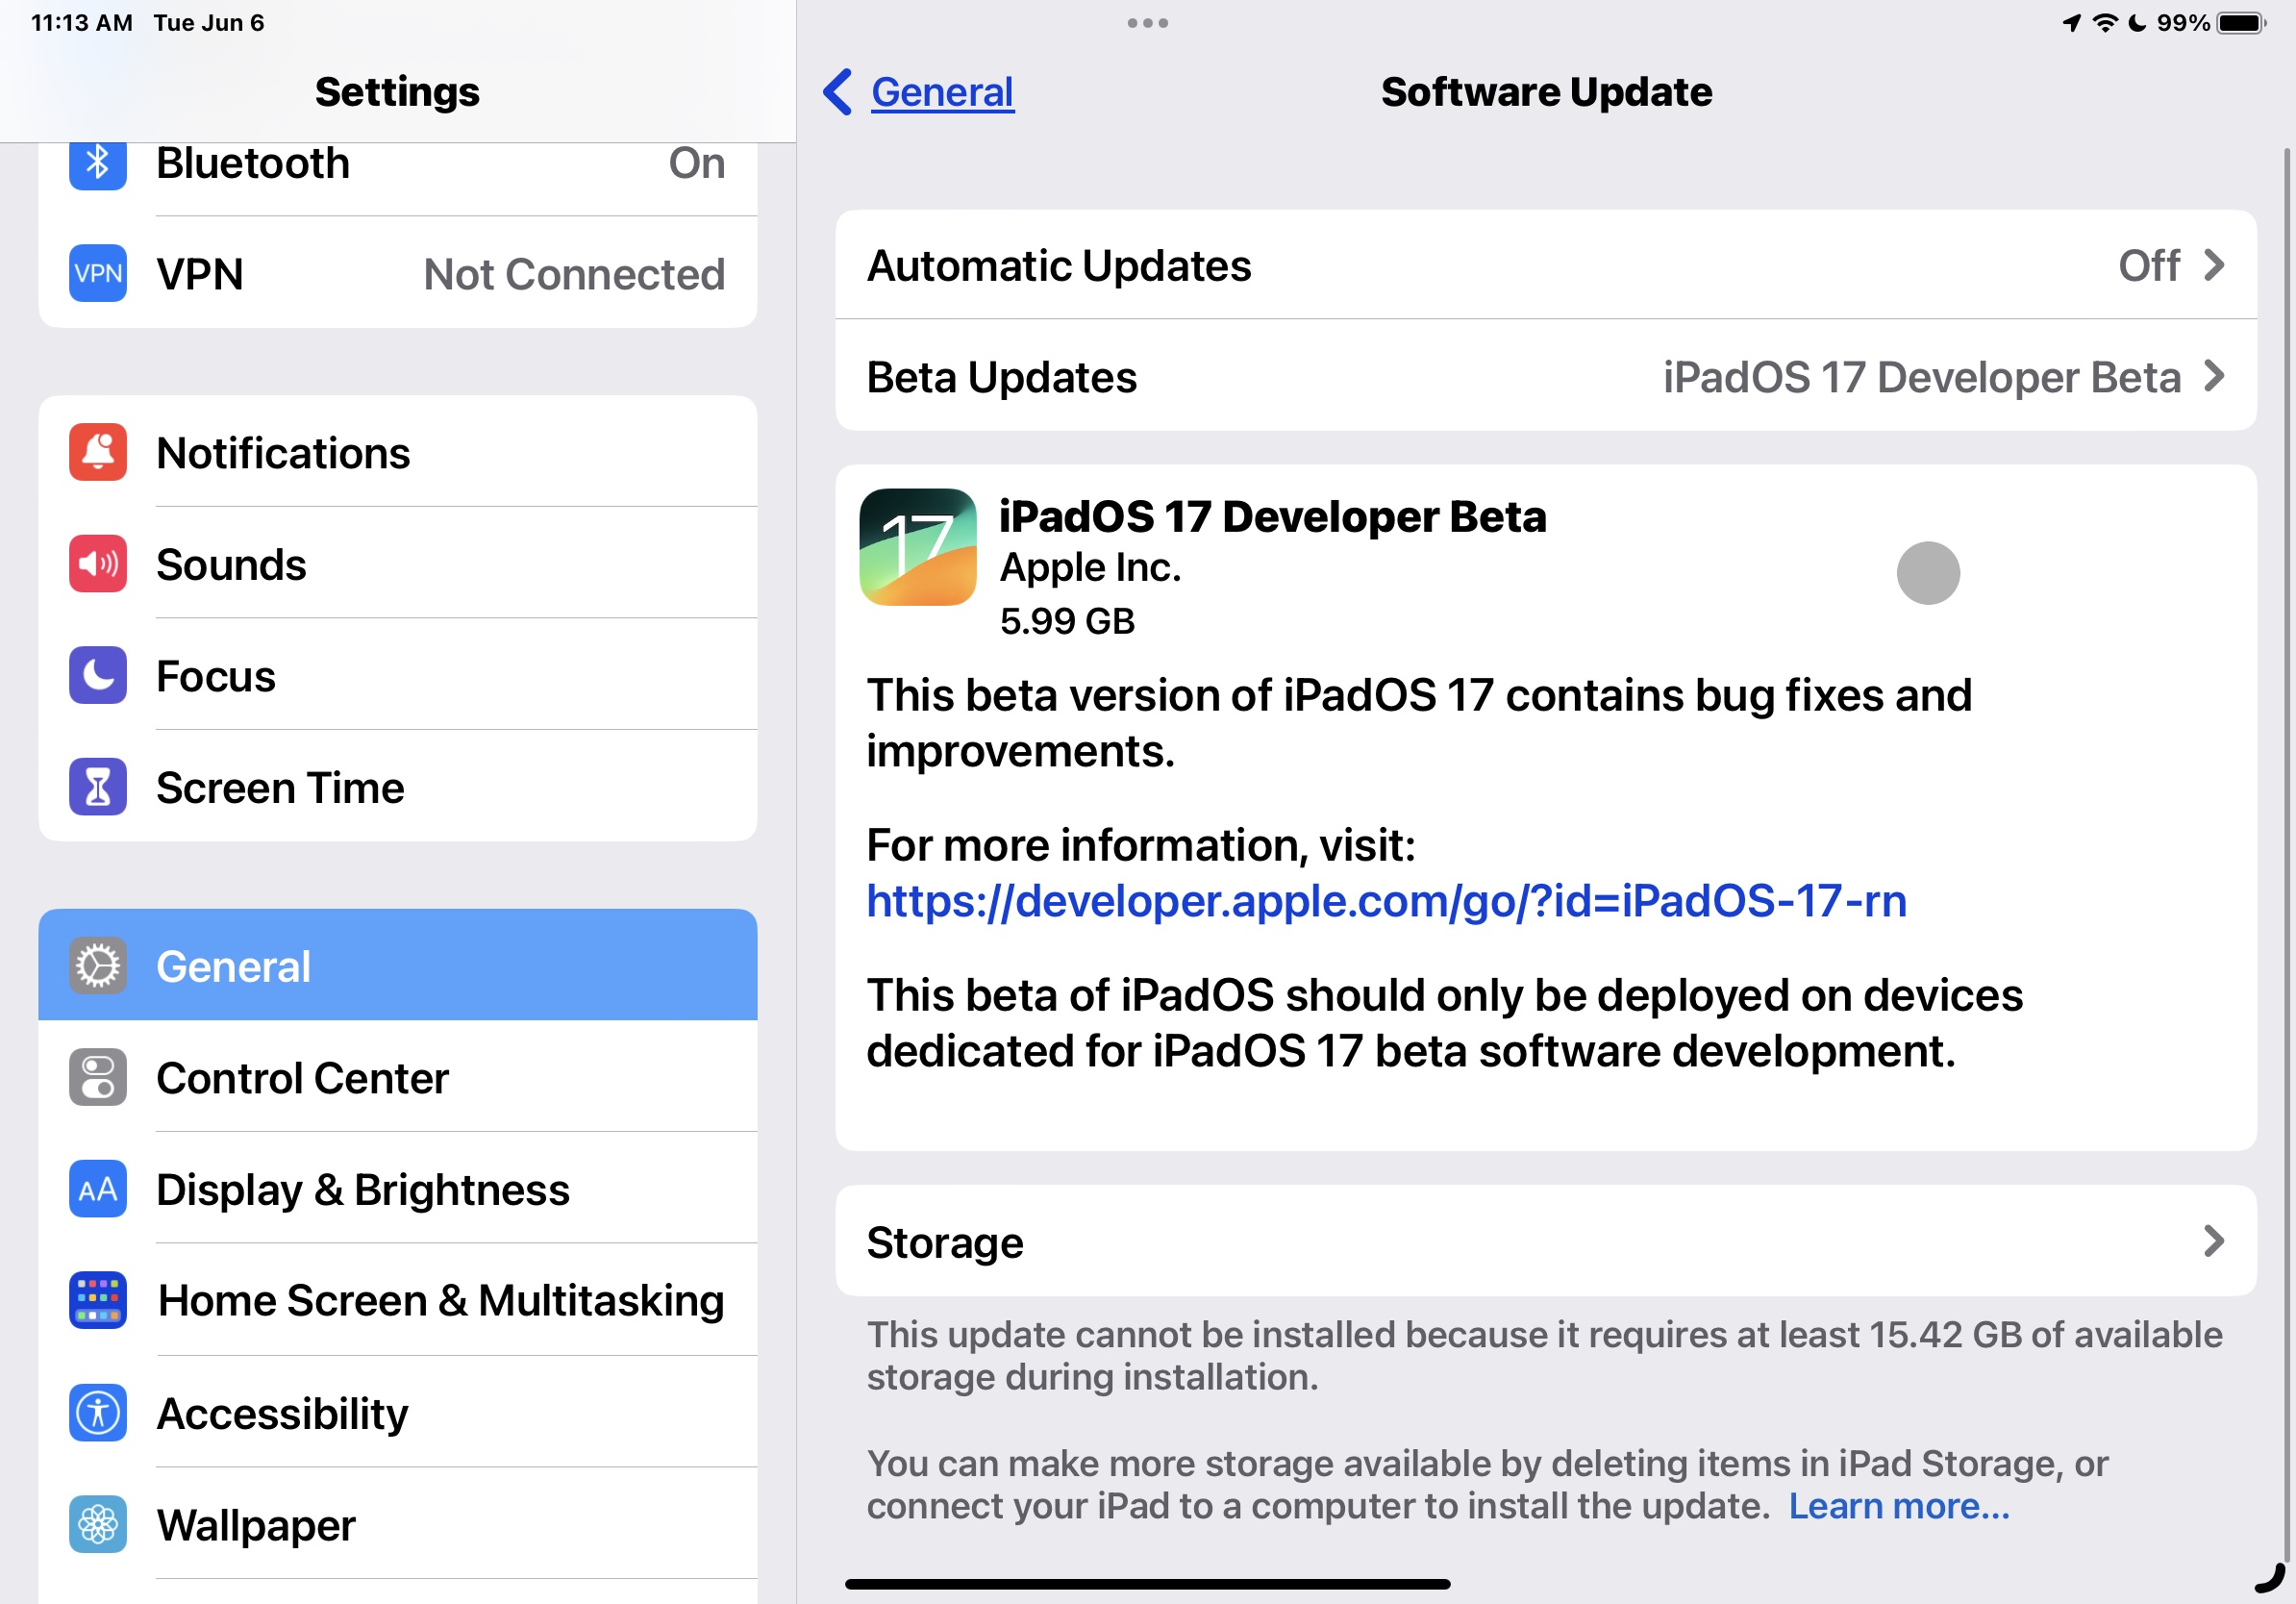 How to Install iPadOS 17 Beta on iPad